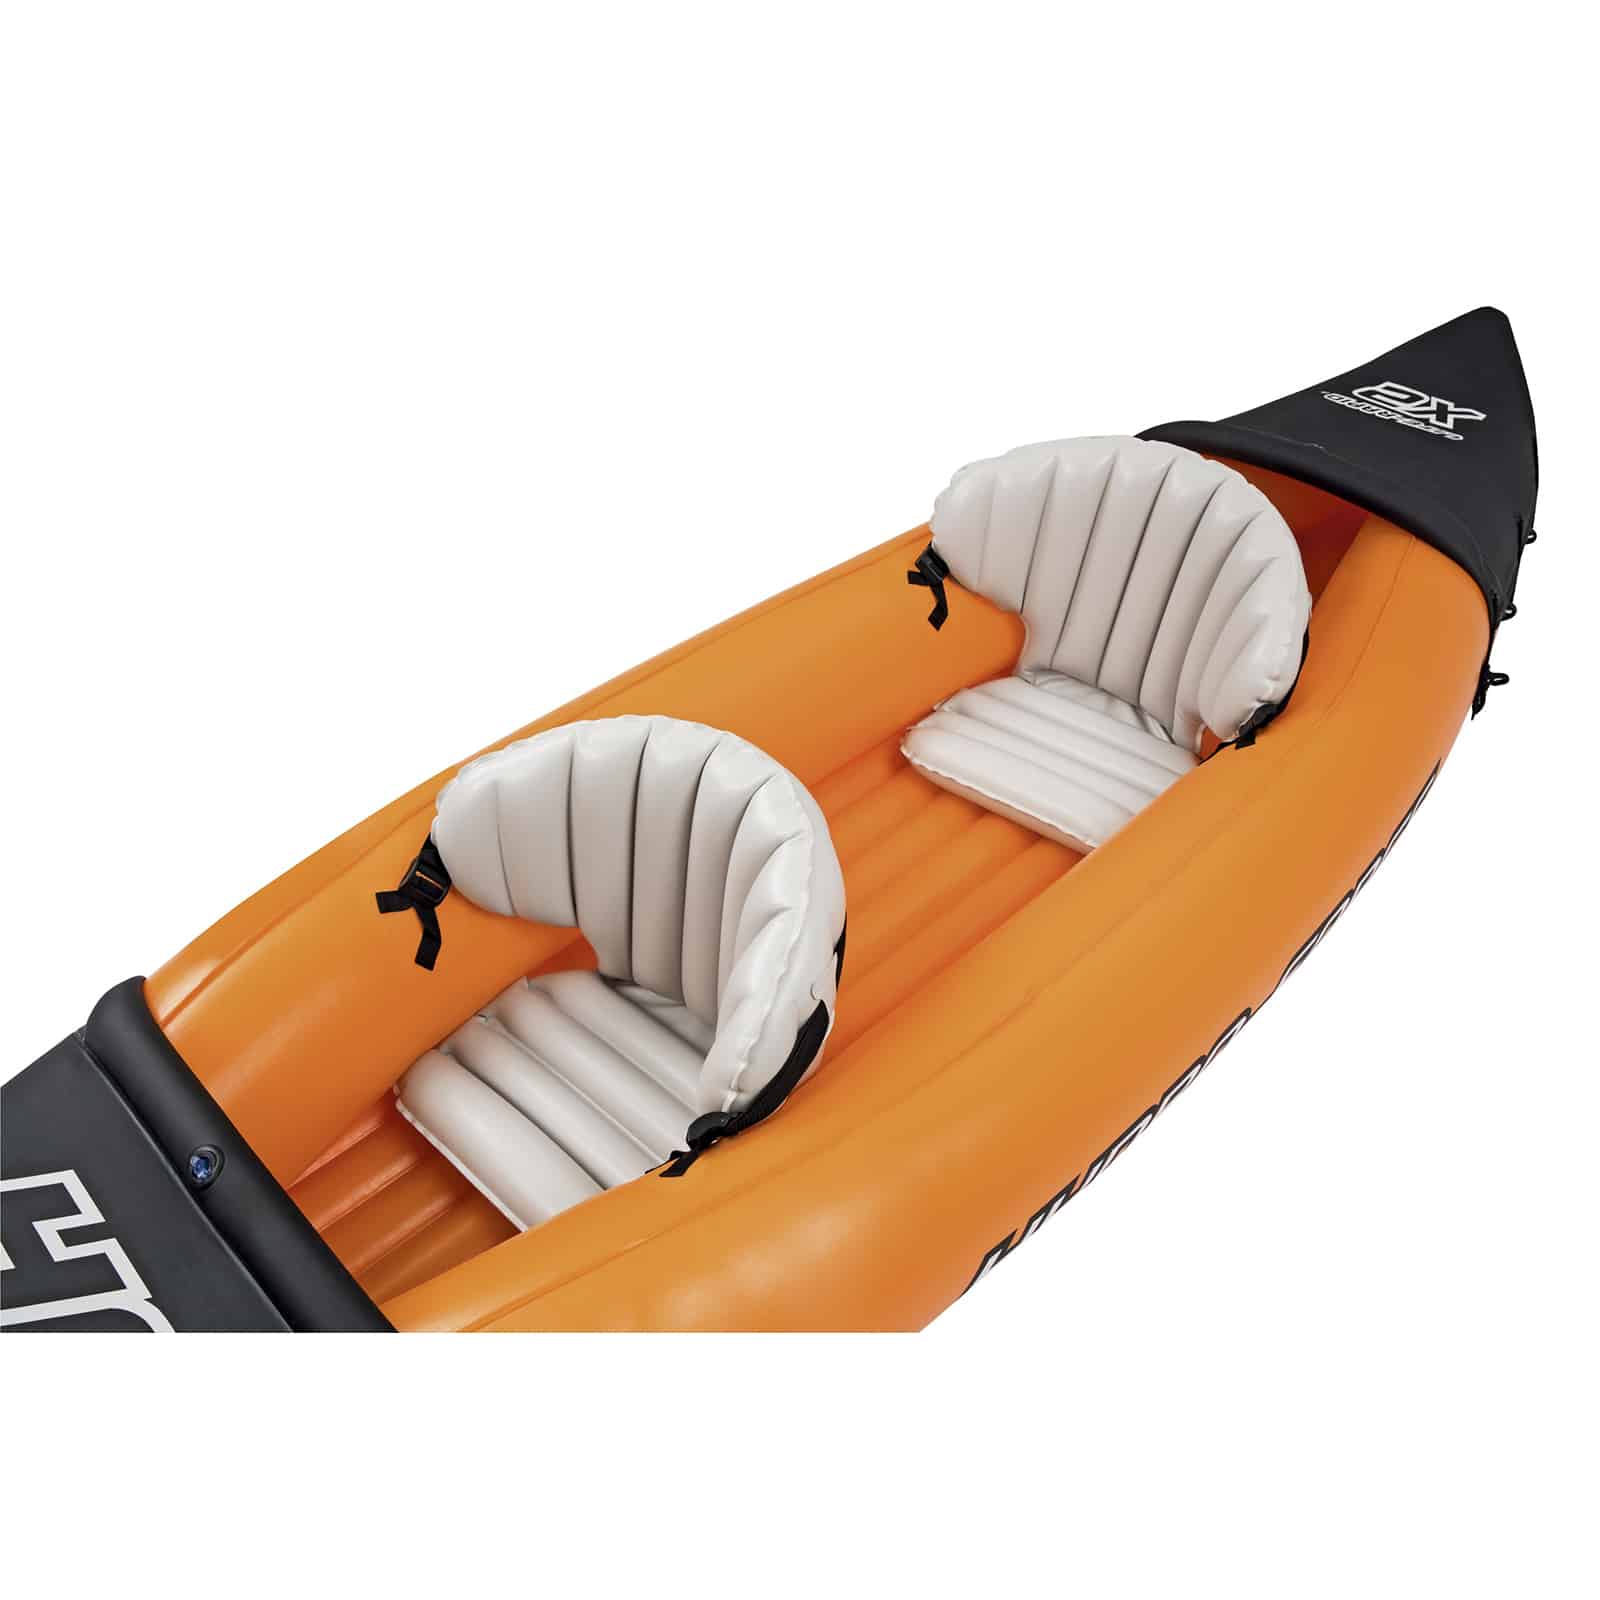 Kayak Insuflável Hydro-force Lite-rapid Bestway